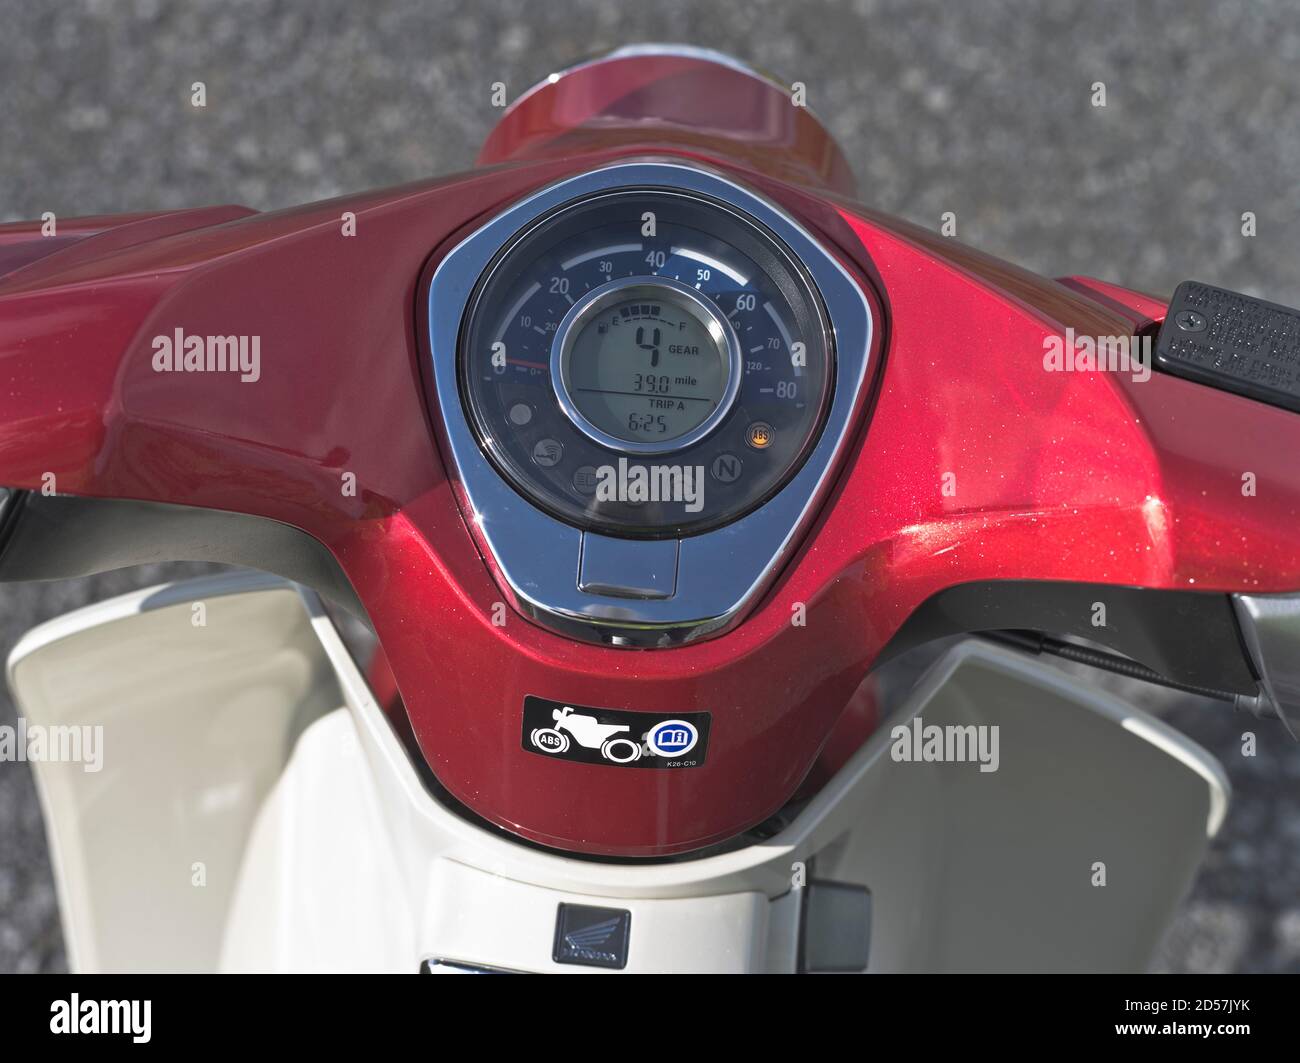 Honda motor bike hi-res stock photography and images - Alamy